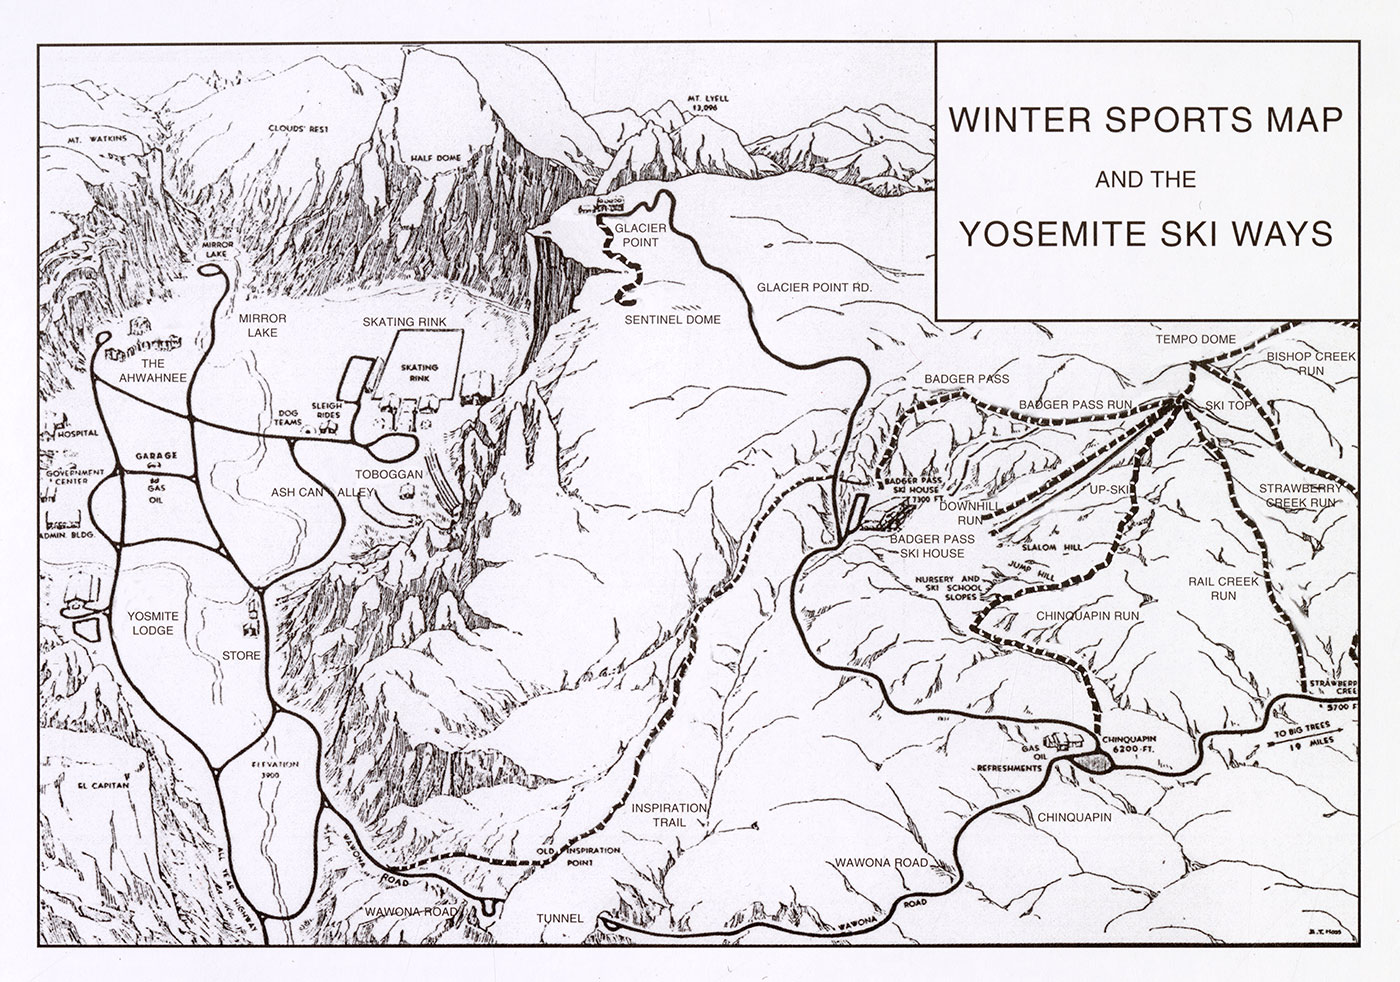 Historic Winter Sports Map and the Yosemite Ski Ways